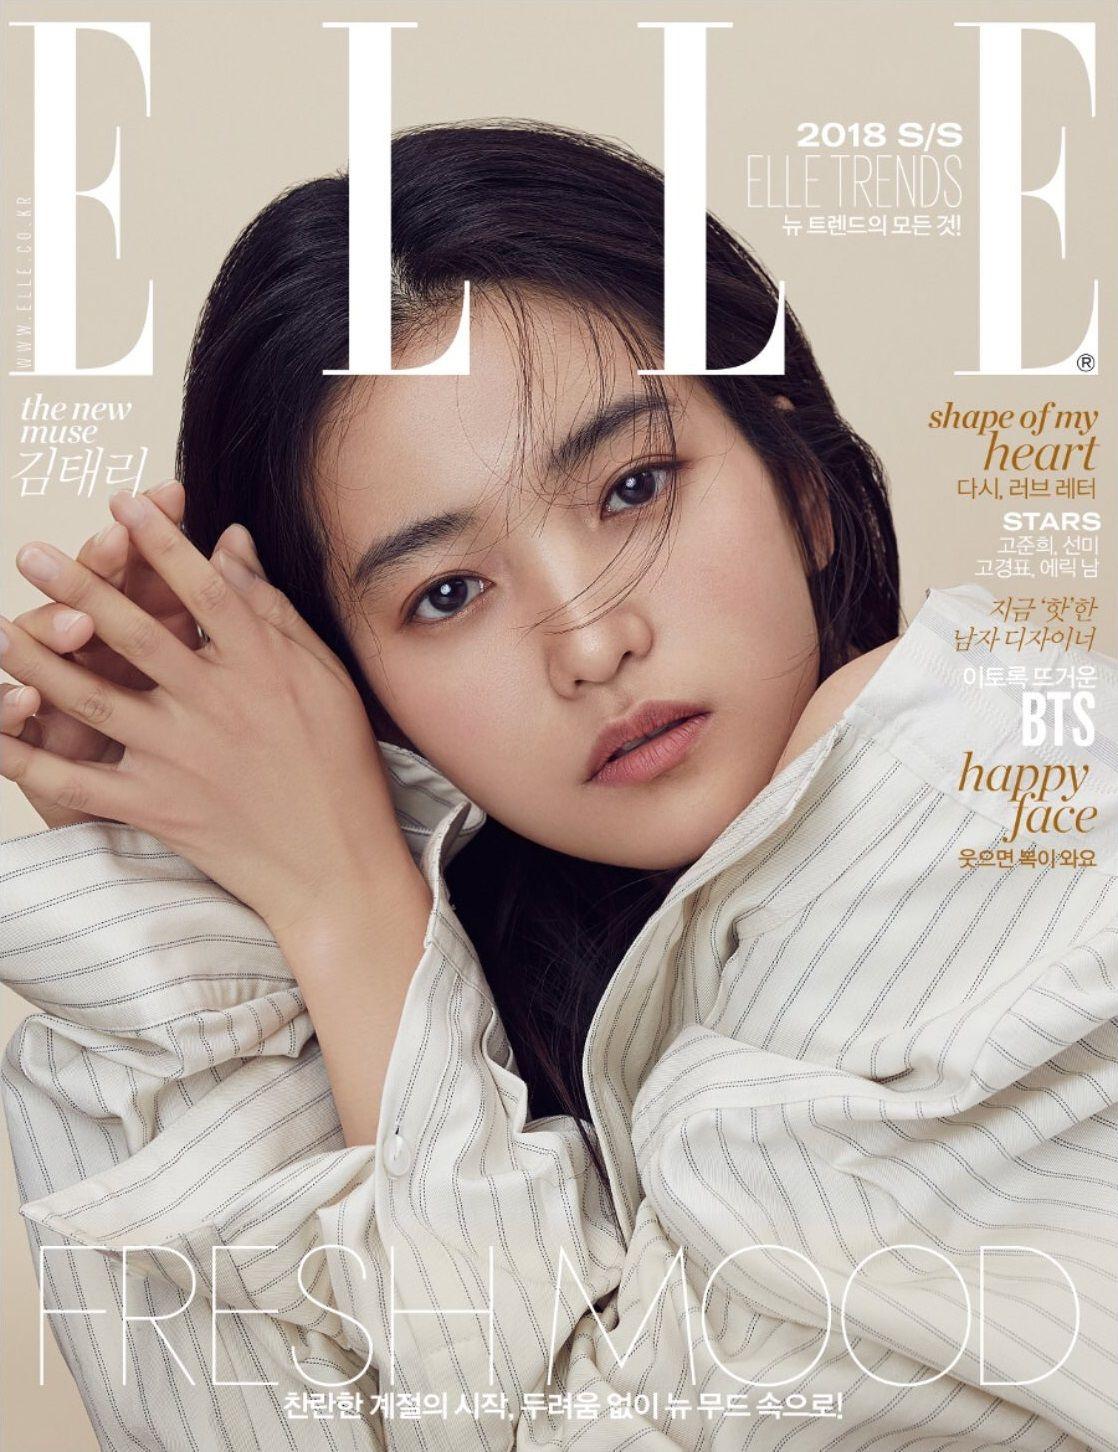 Doe Eyed Kim Tae Ri On The Cover Of Elle Korea. Kim Tae Ri In 2019